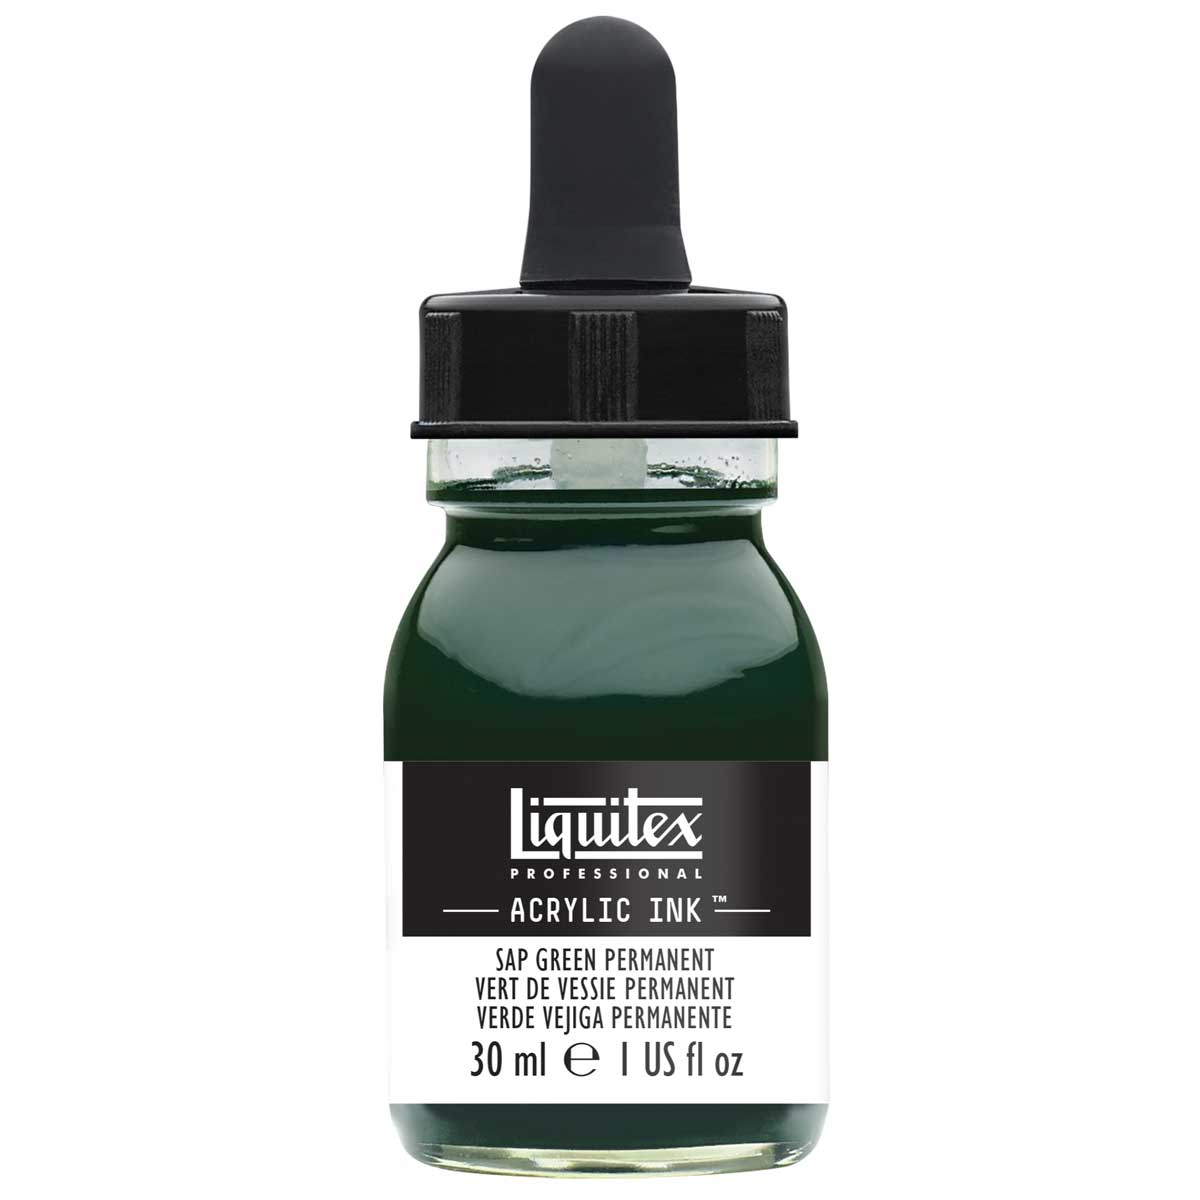 Liquitex Professional Acrylic Ink - Sap Green Permanent 30ml/1oz